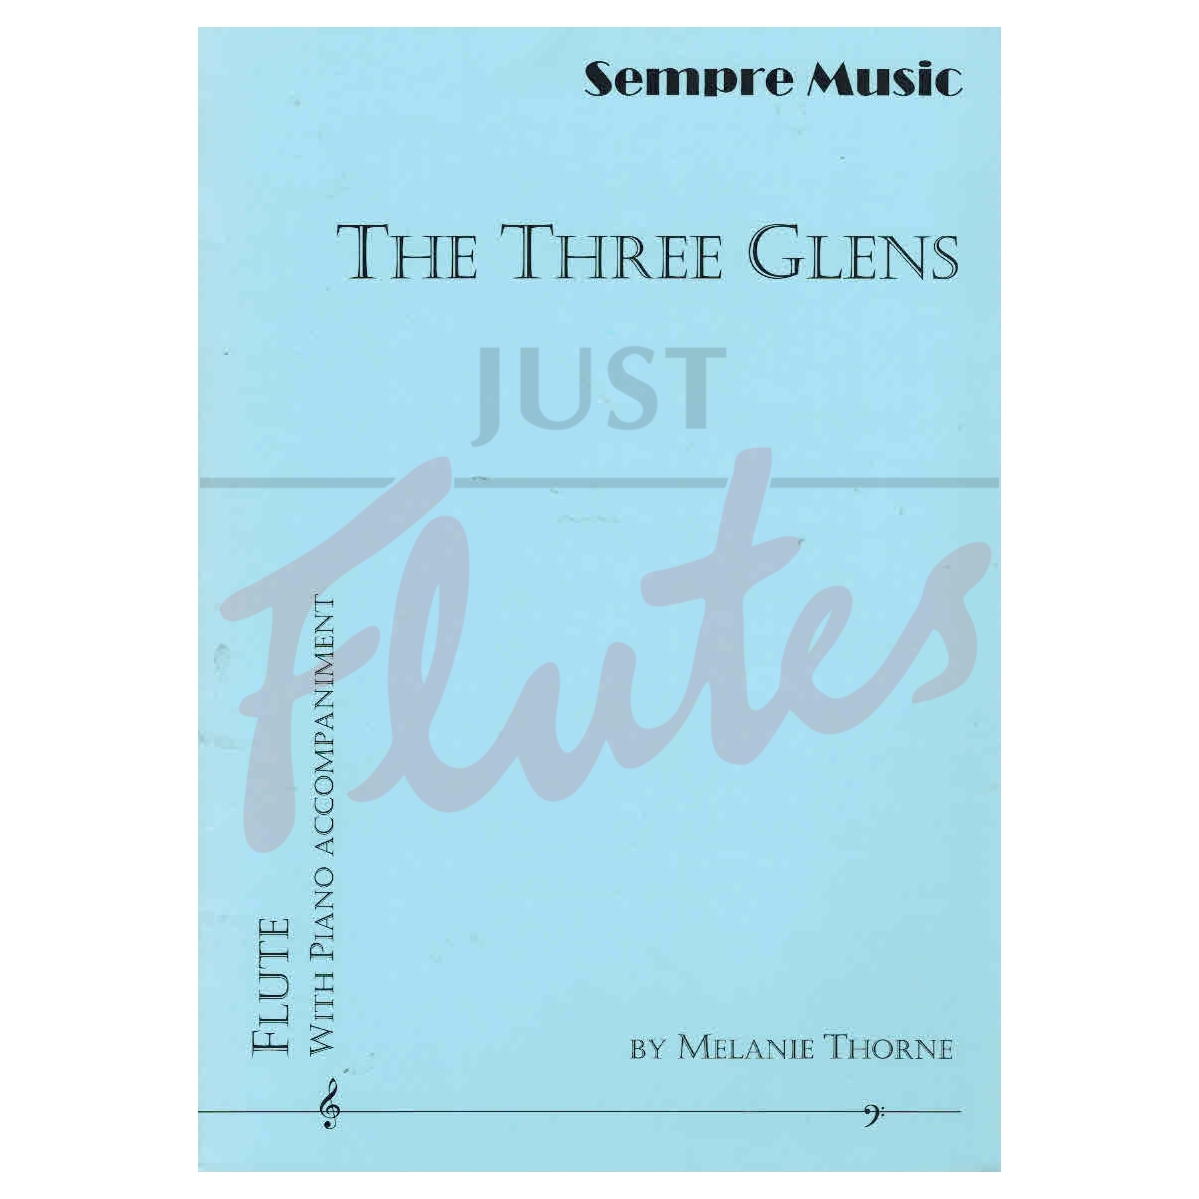 The Three Glens